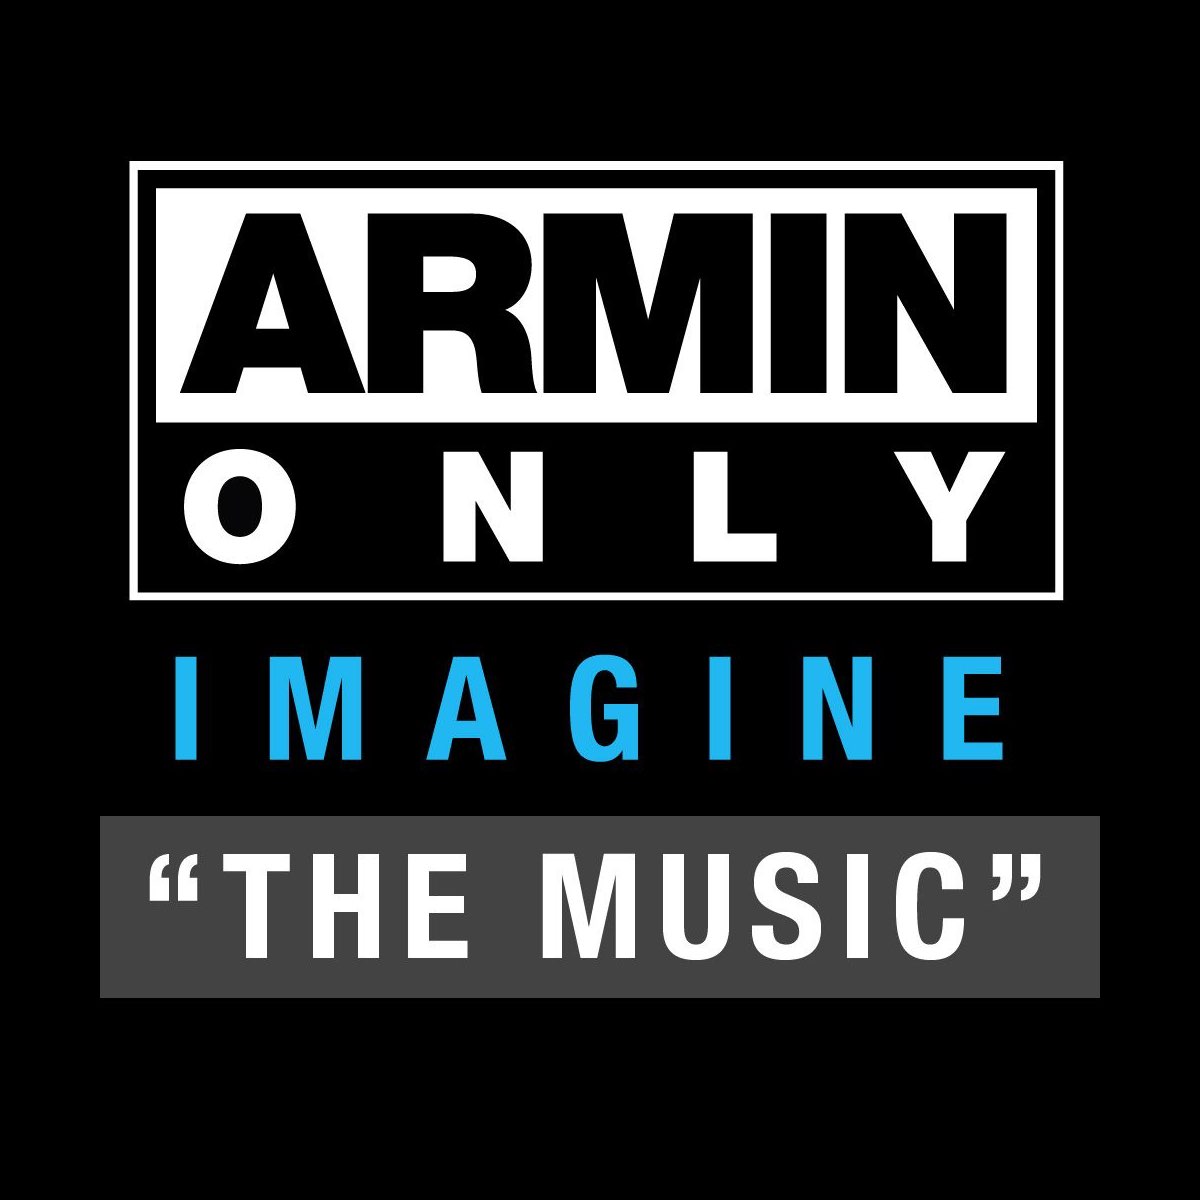 Armin Only – Imagine “The Music” by Armin van Buuren on Apple Music